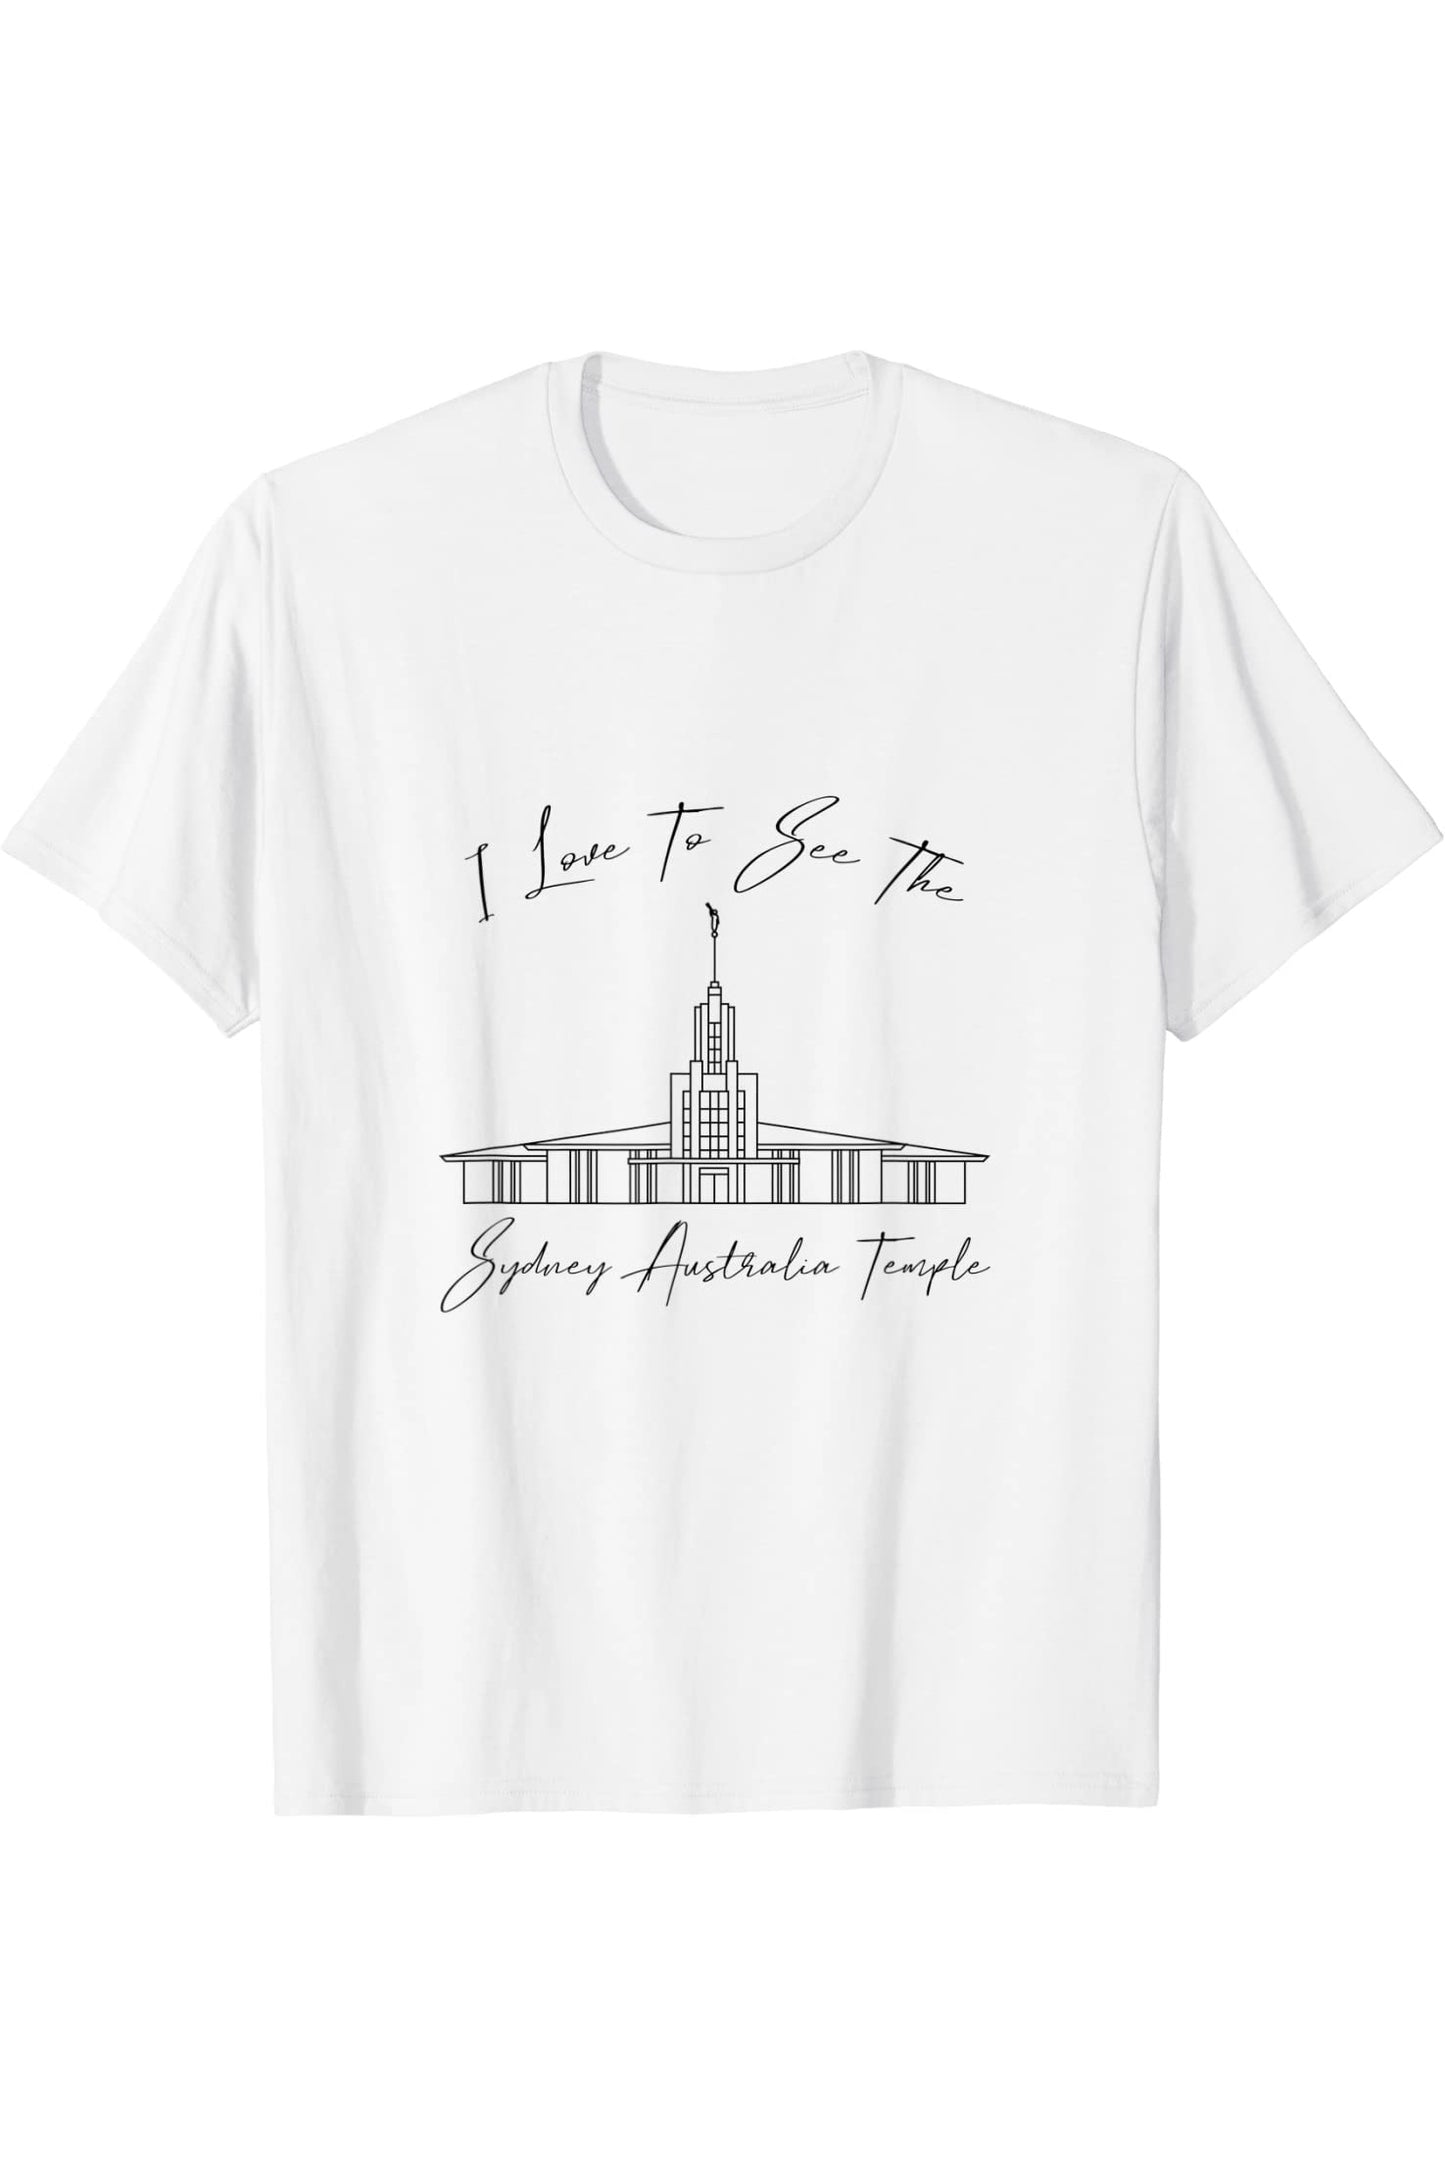 Sydney Australia Temple T-Shirt - Calligraphy Style (English) US